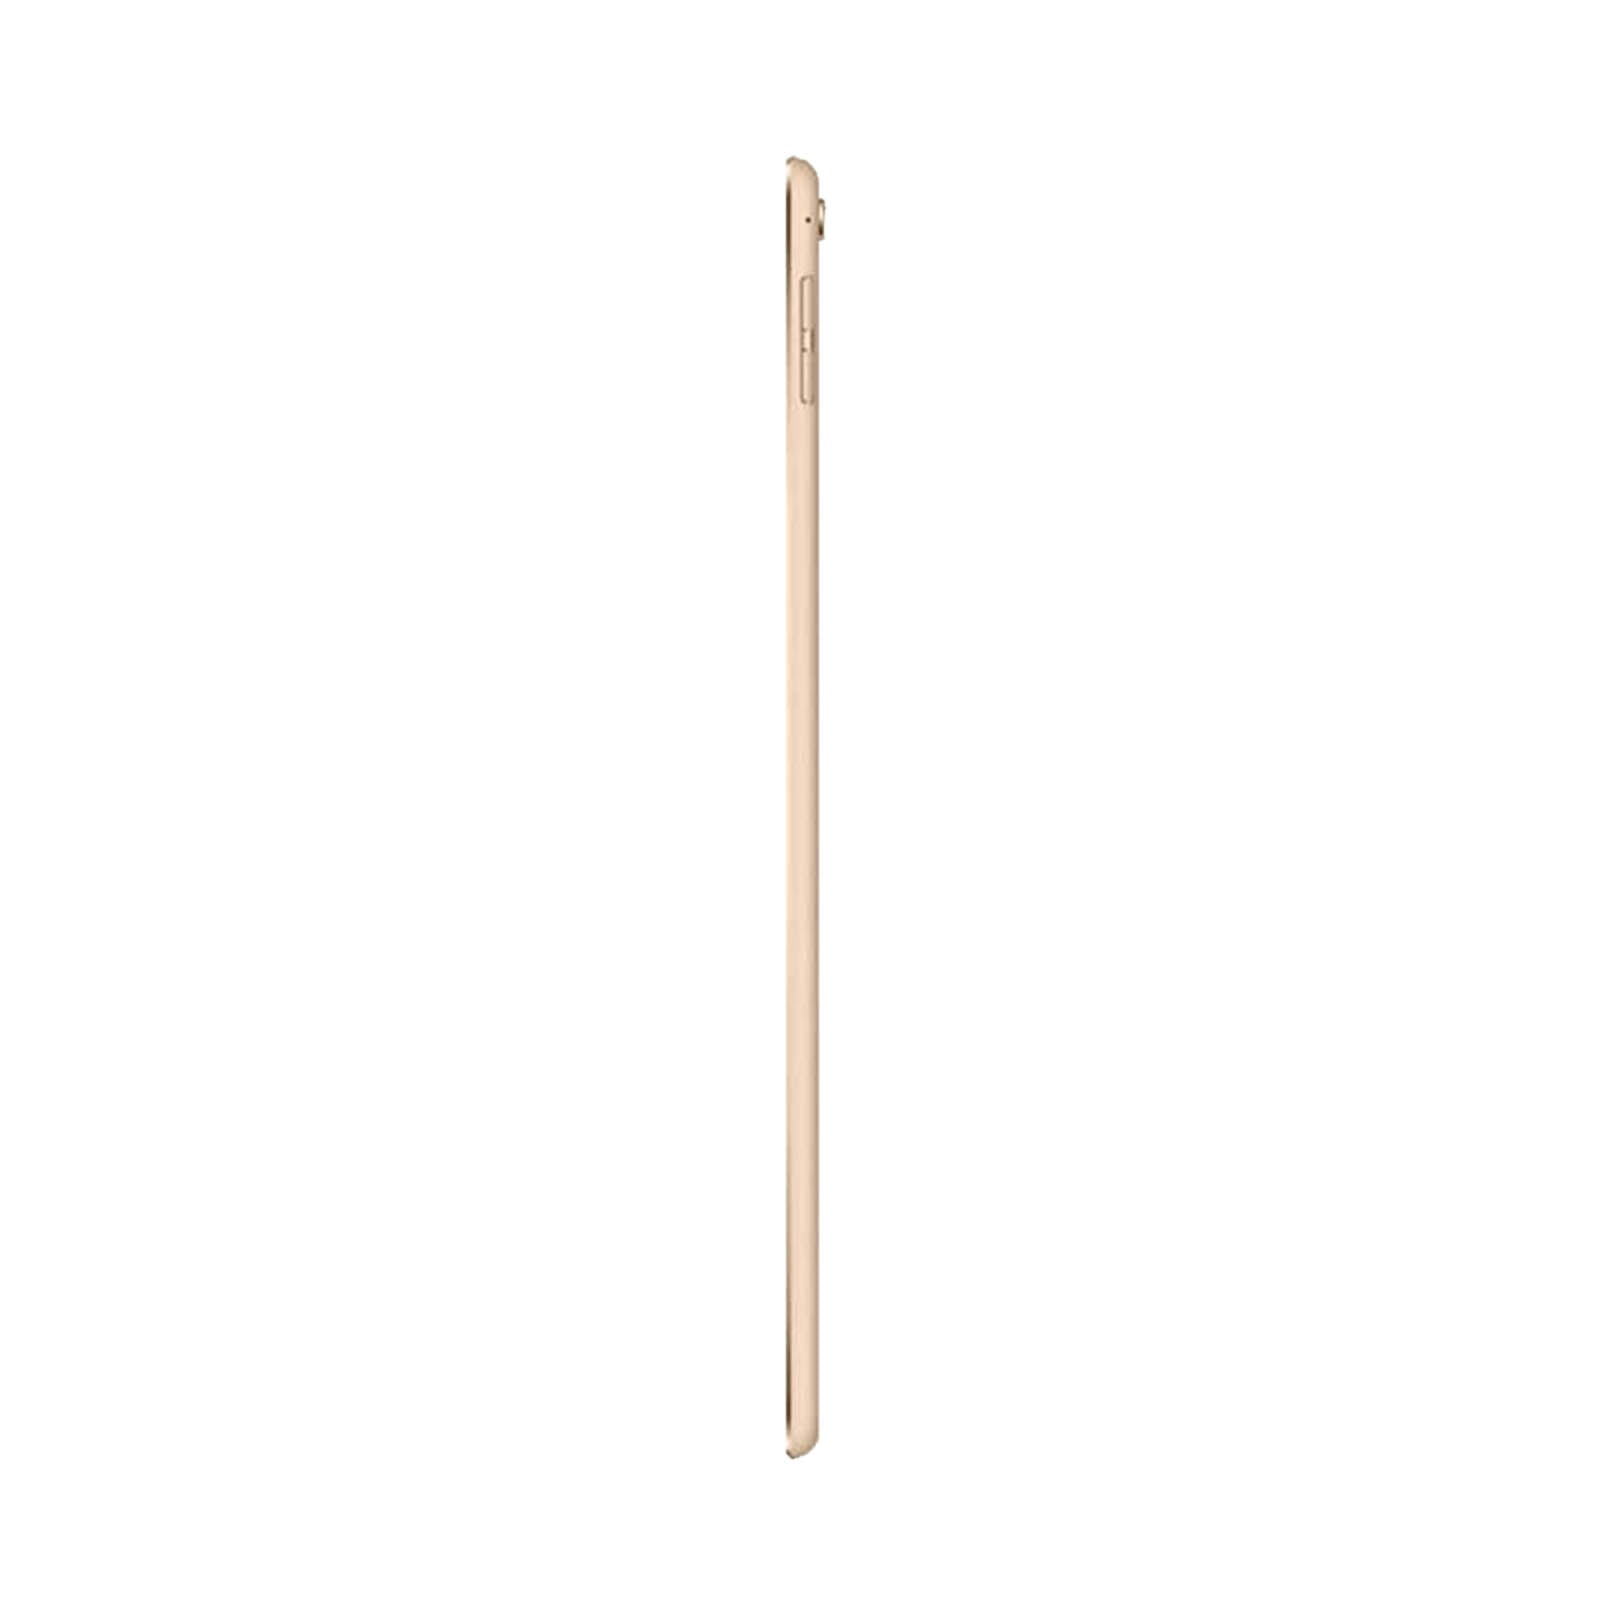 iPad Pro 9.7 Inch 128GB Gold Pristine - WiFi